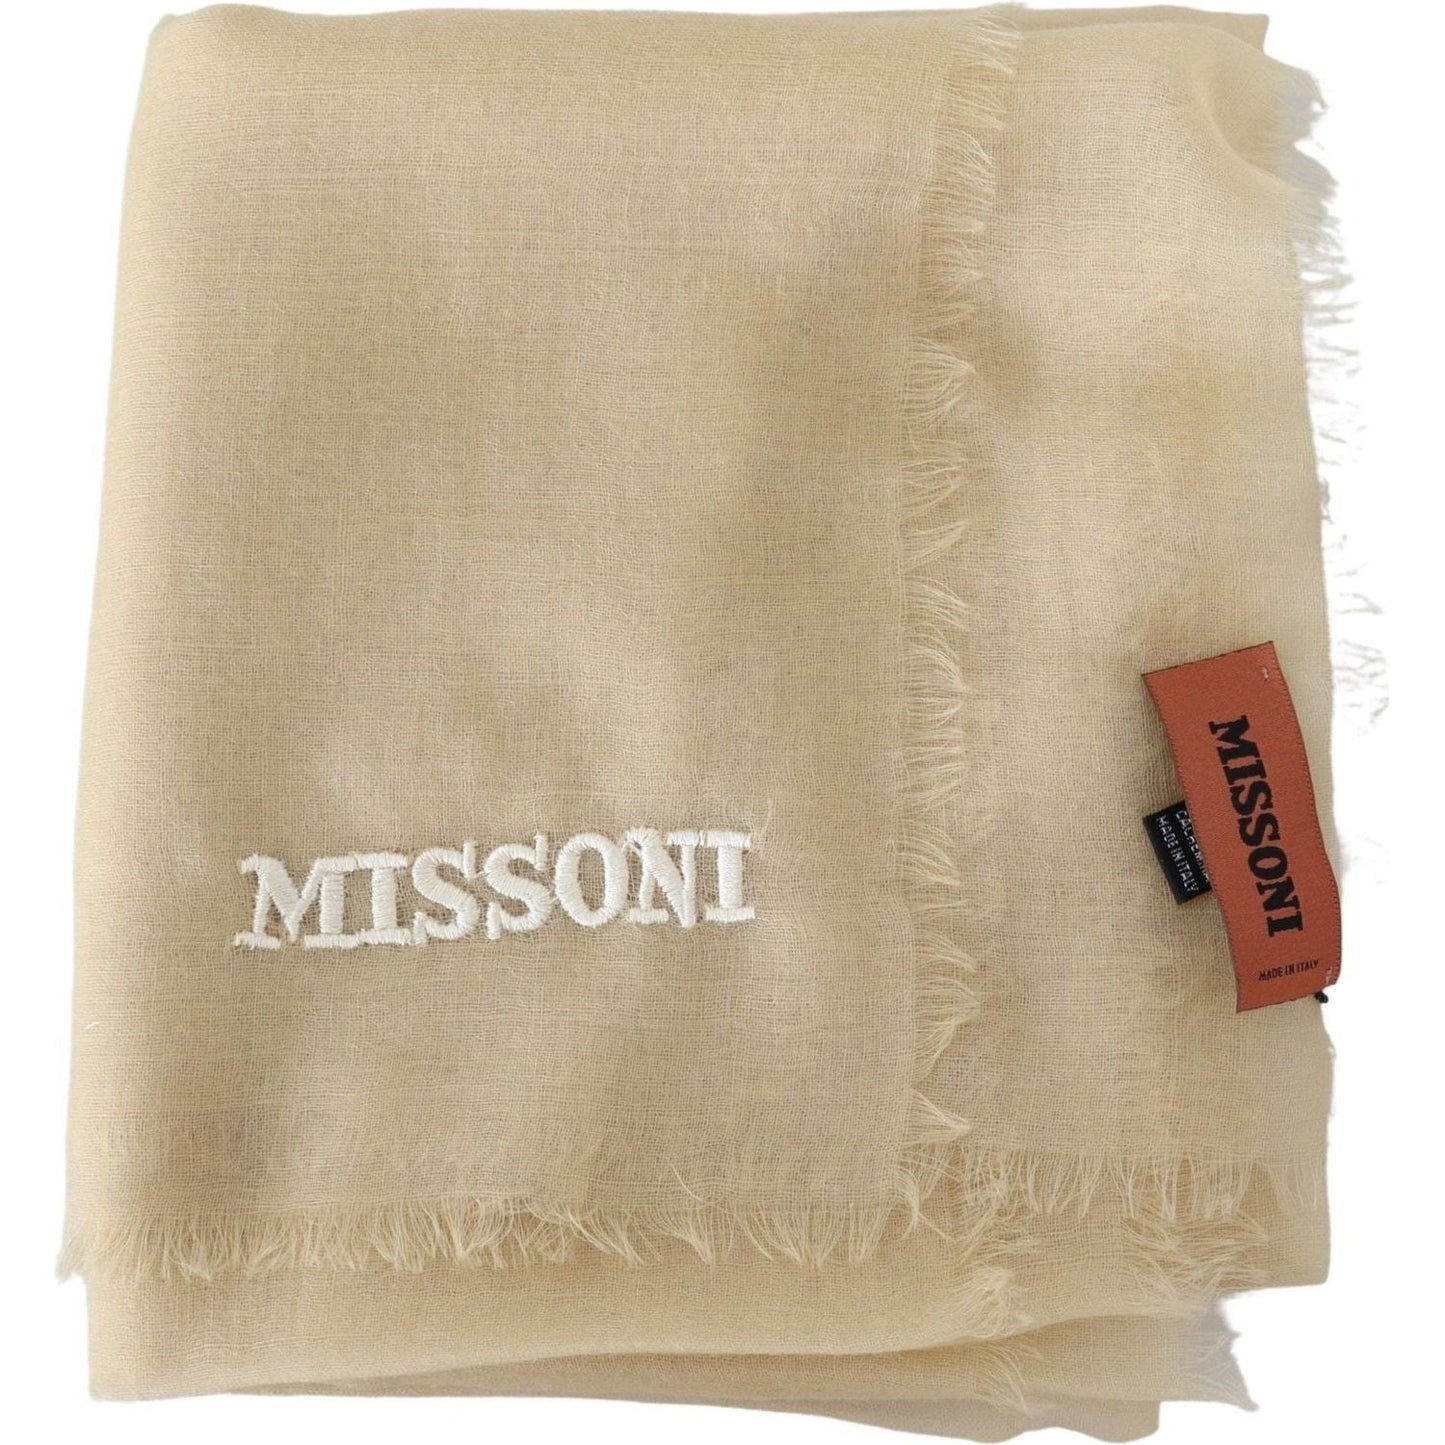 Missoni Elegant Cashmere Scarf in Beige beige-cashmere-unisex-neck-scarf IMG_1173-b4a0d34c-ea7.jpg